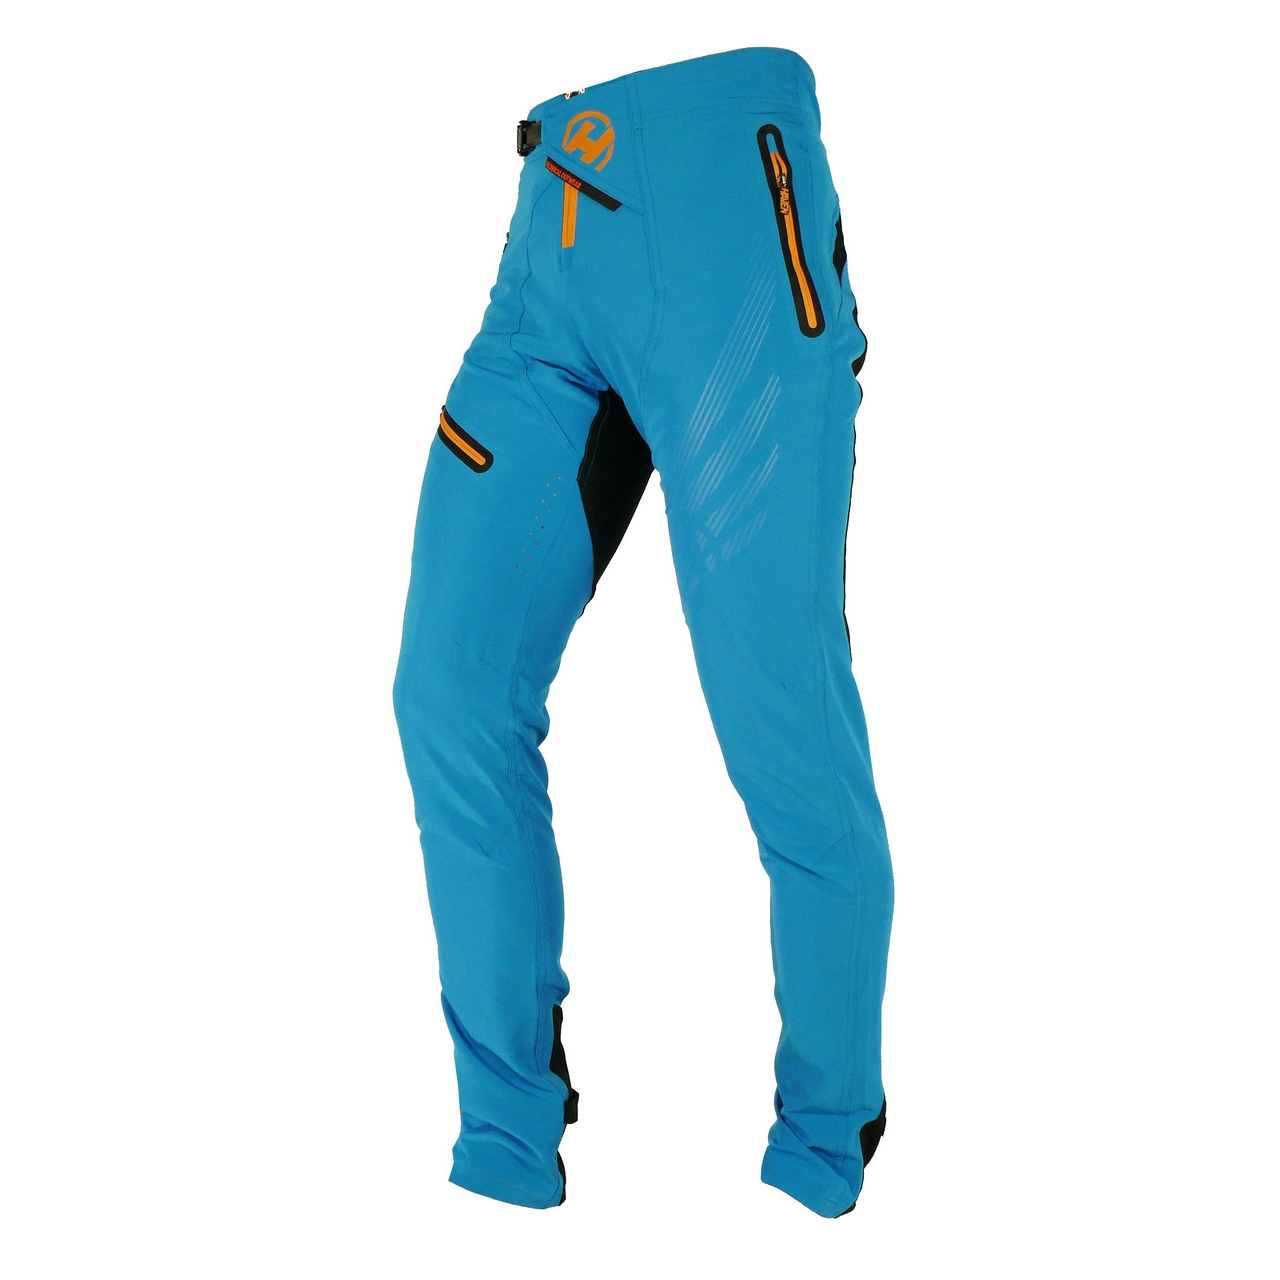 Kalhoty unisex Haven Energizer - modré-oranžové, XXL